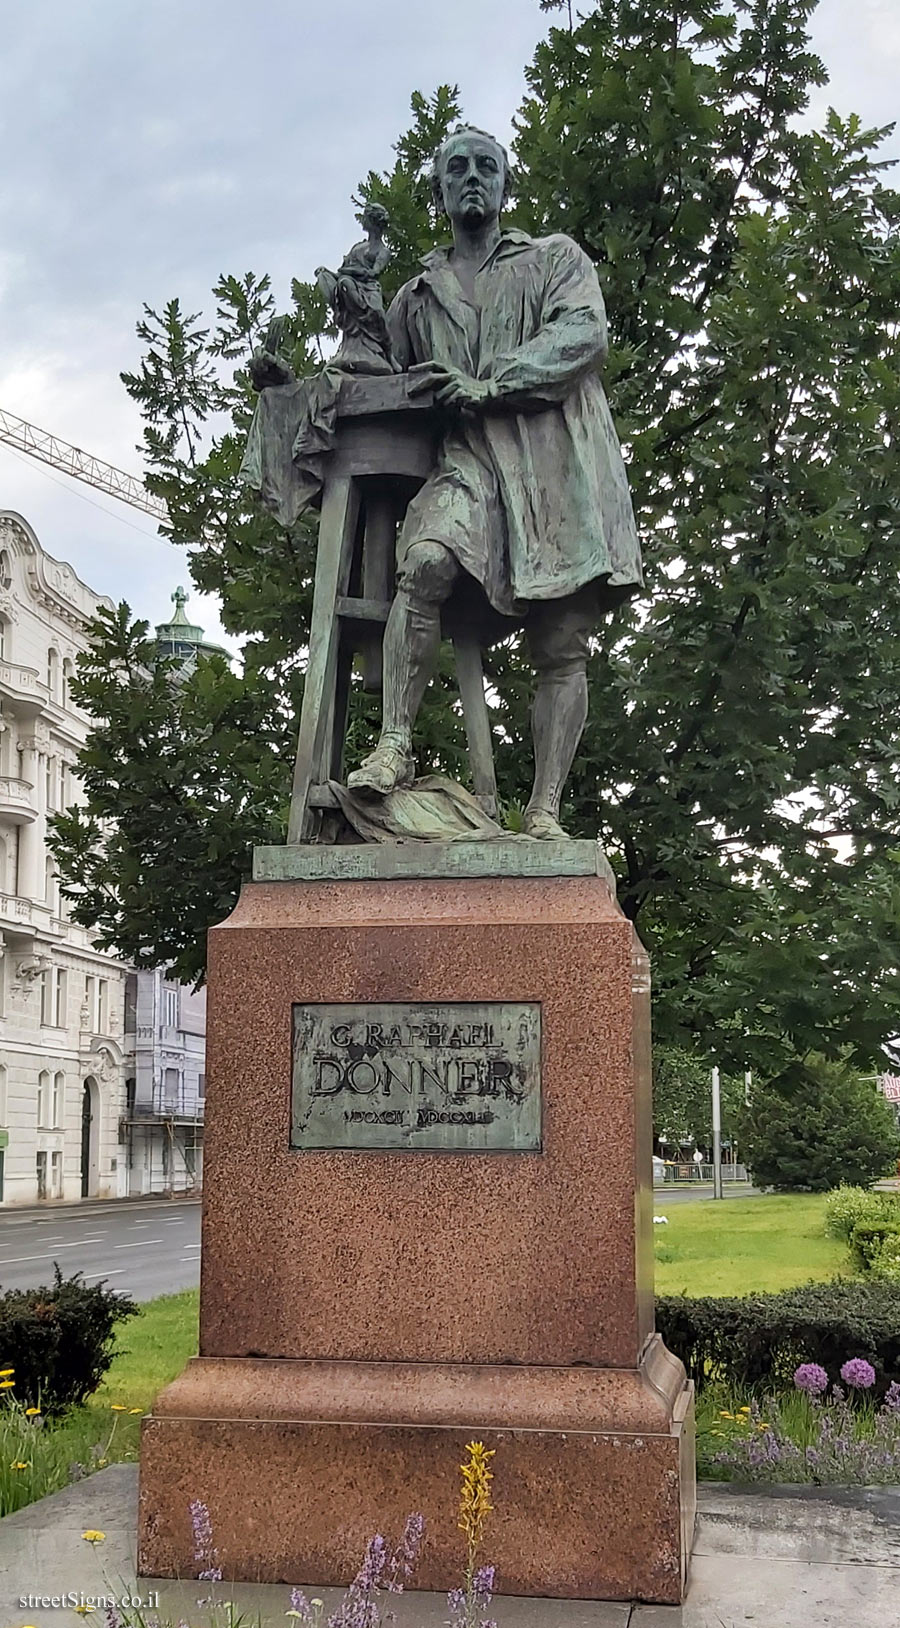 Vienna - A monument in memory of the sculptor Georg Rafael Donner - Lothringerstraße 5, 1010 Wien, Austria